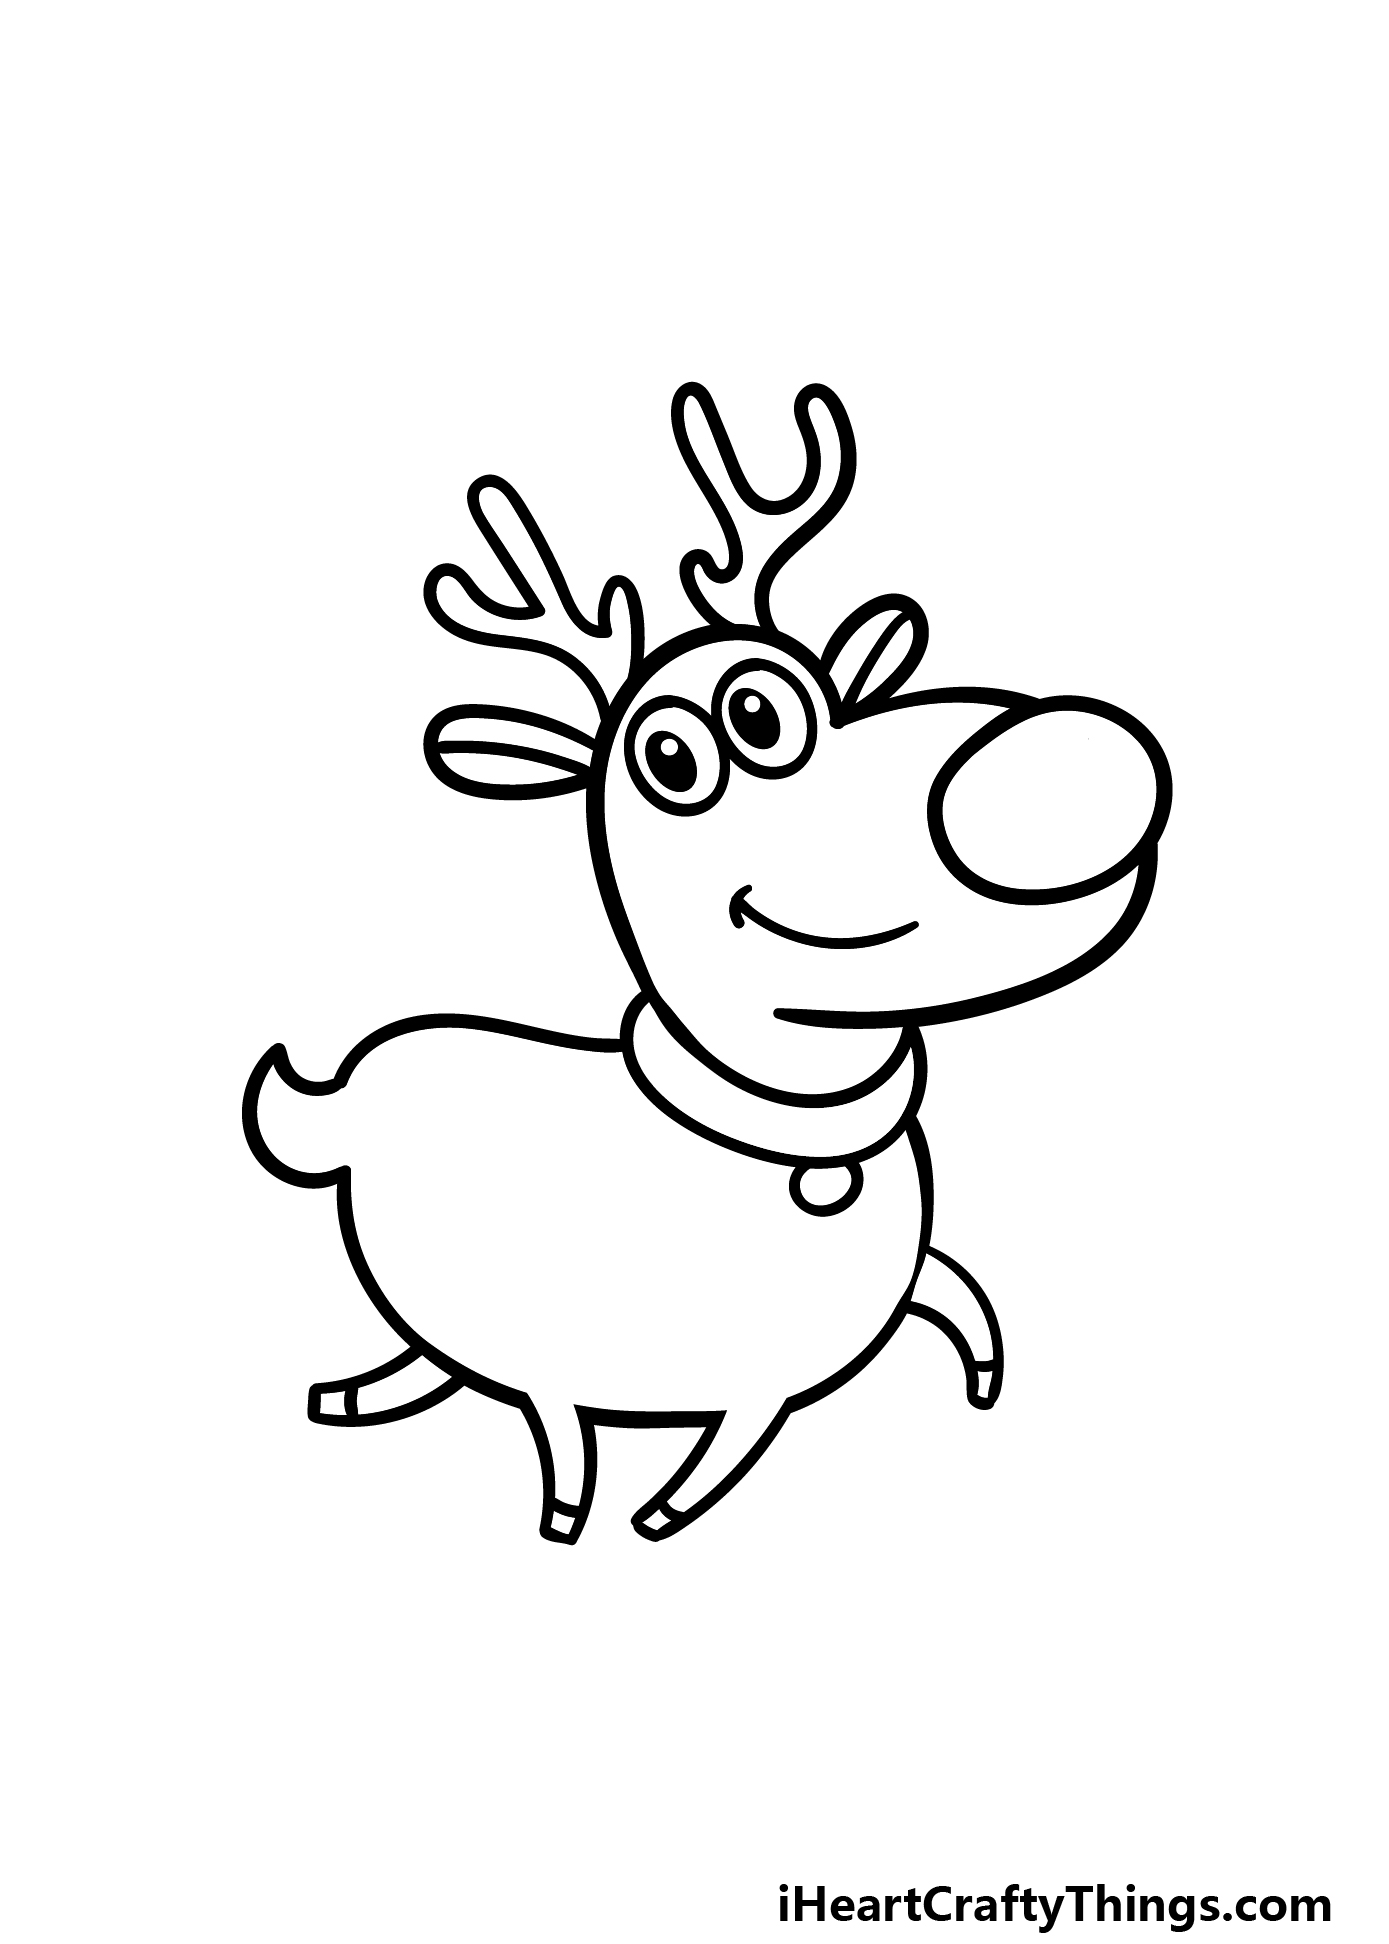 how to draw a cartoon reindeer step 5